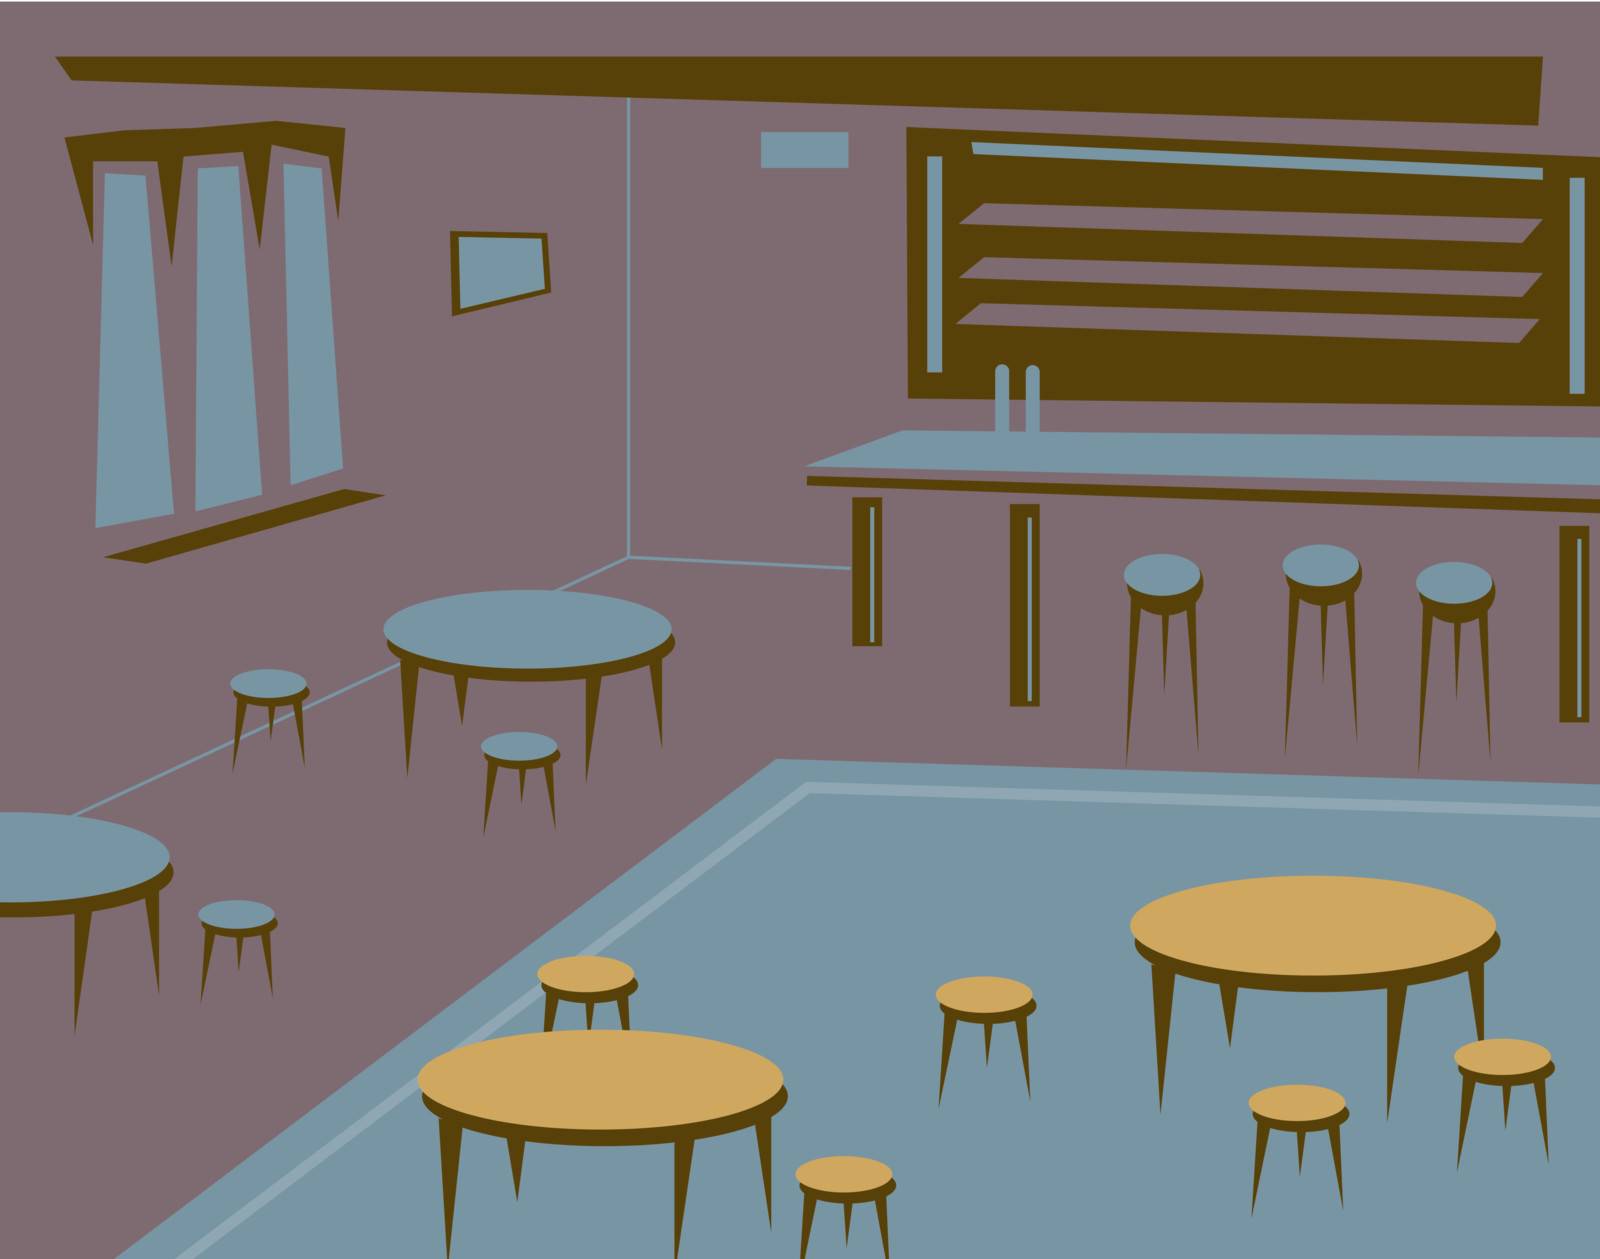 Editable vector illustration of an empty bar or pub as a background